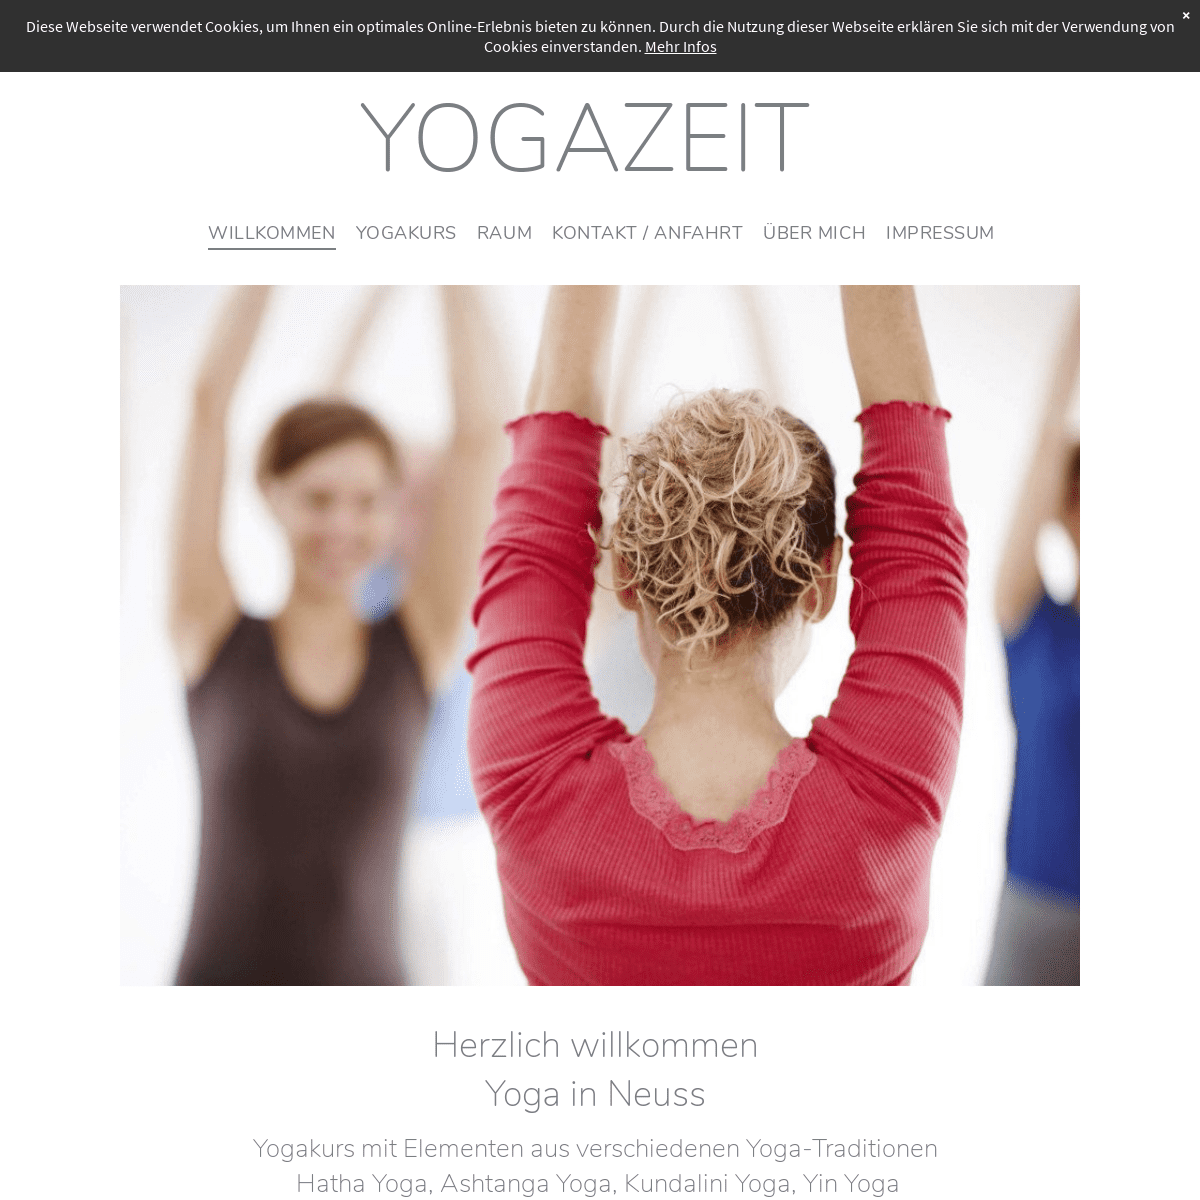 A complete backup of yogazeit-neuss.de